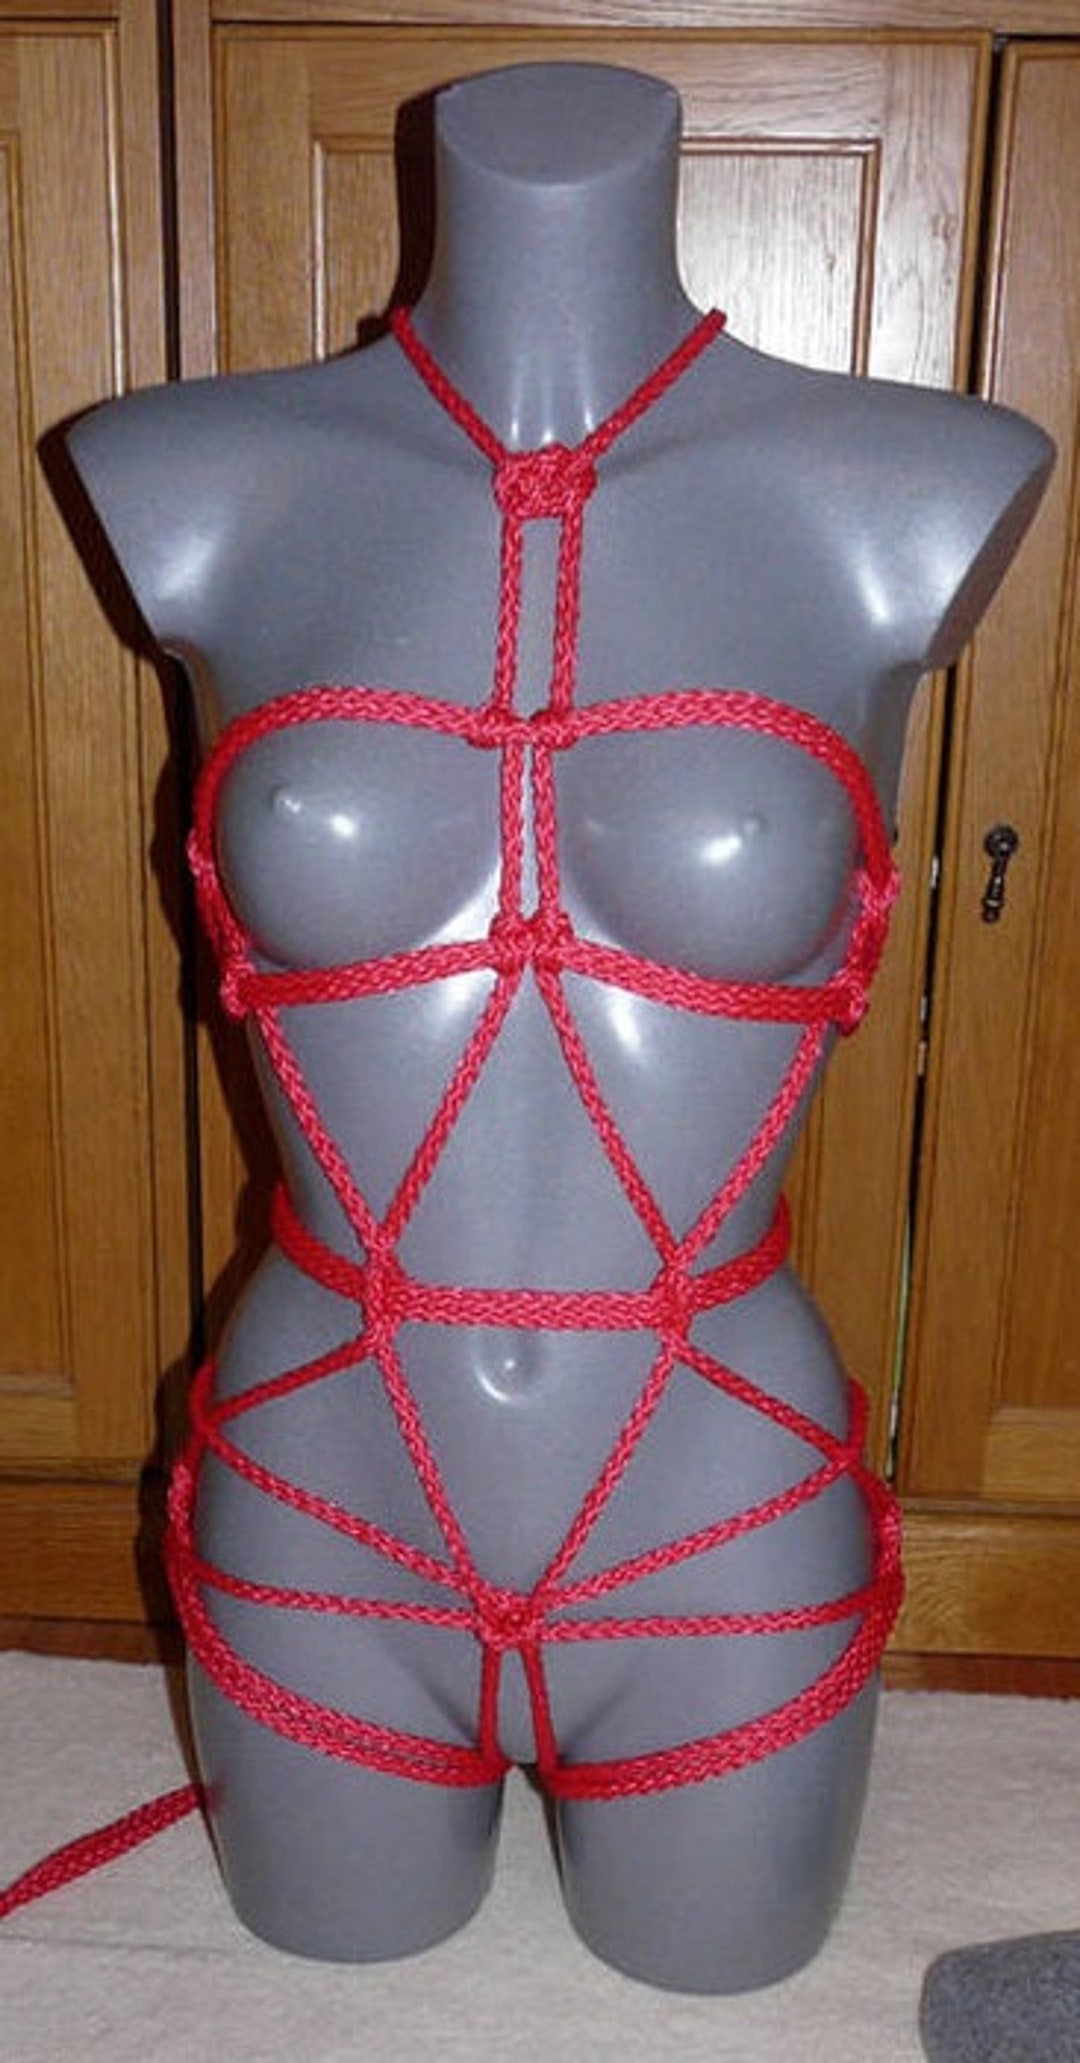 Harness in Red Rope Bondage Set BDSM Rope Bondage